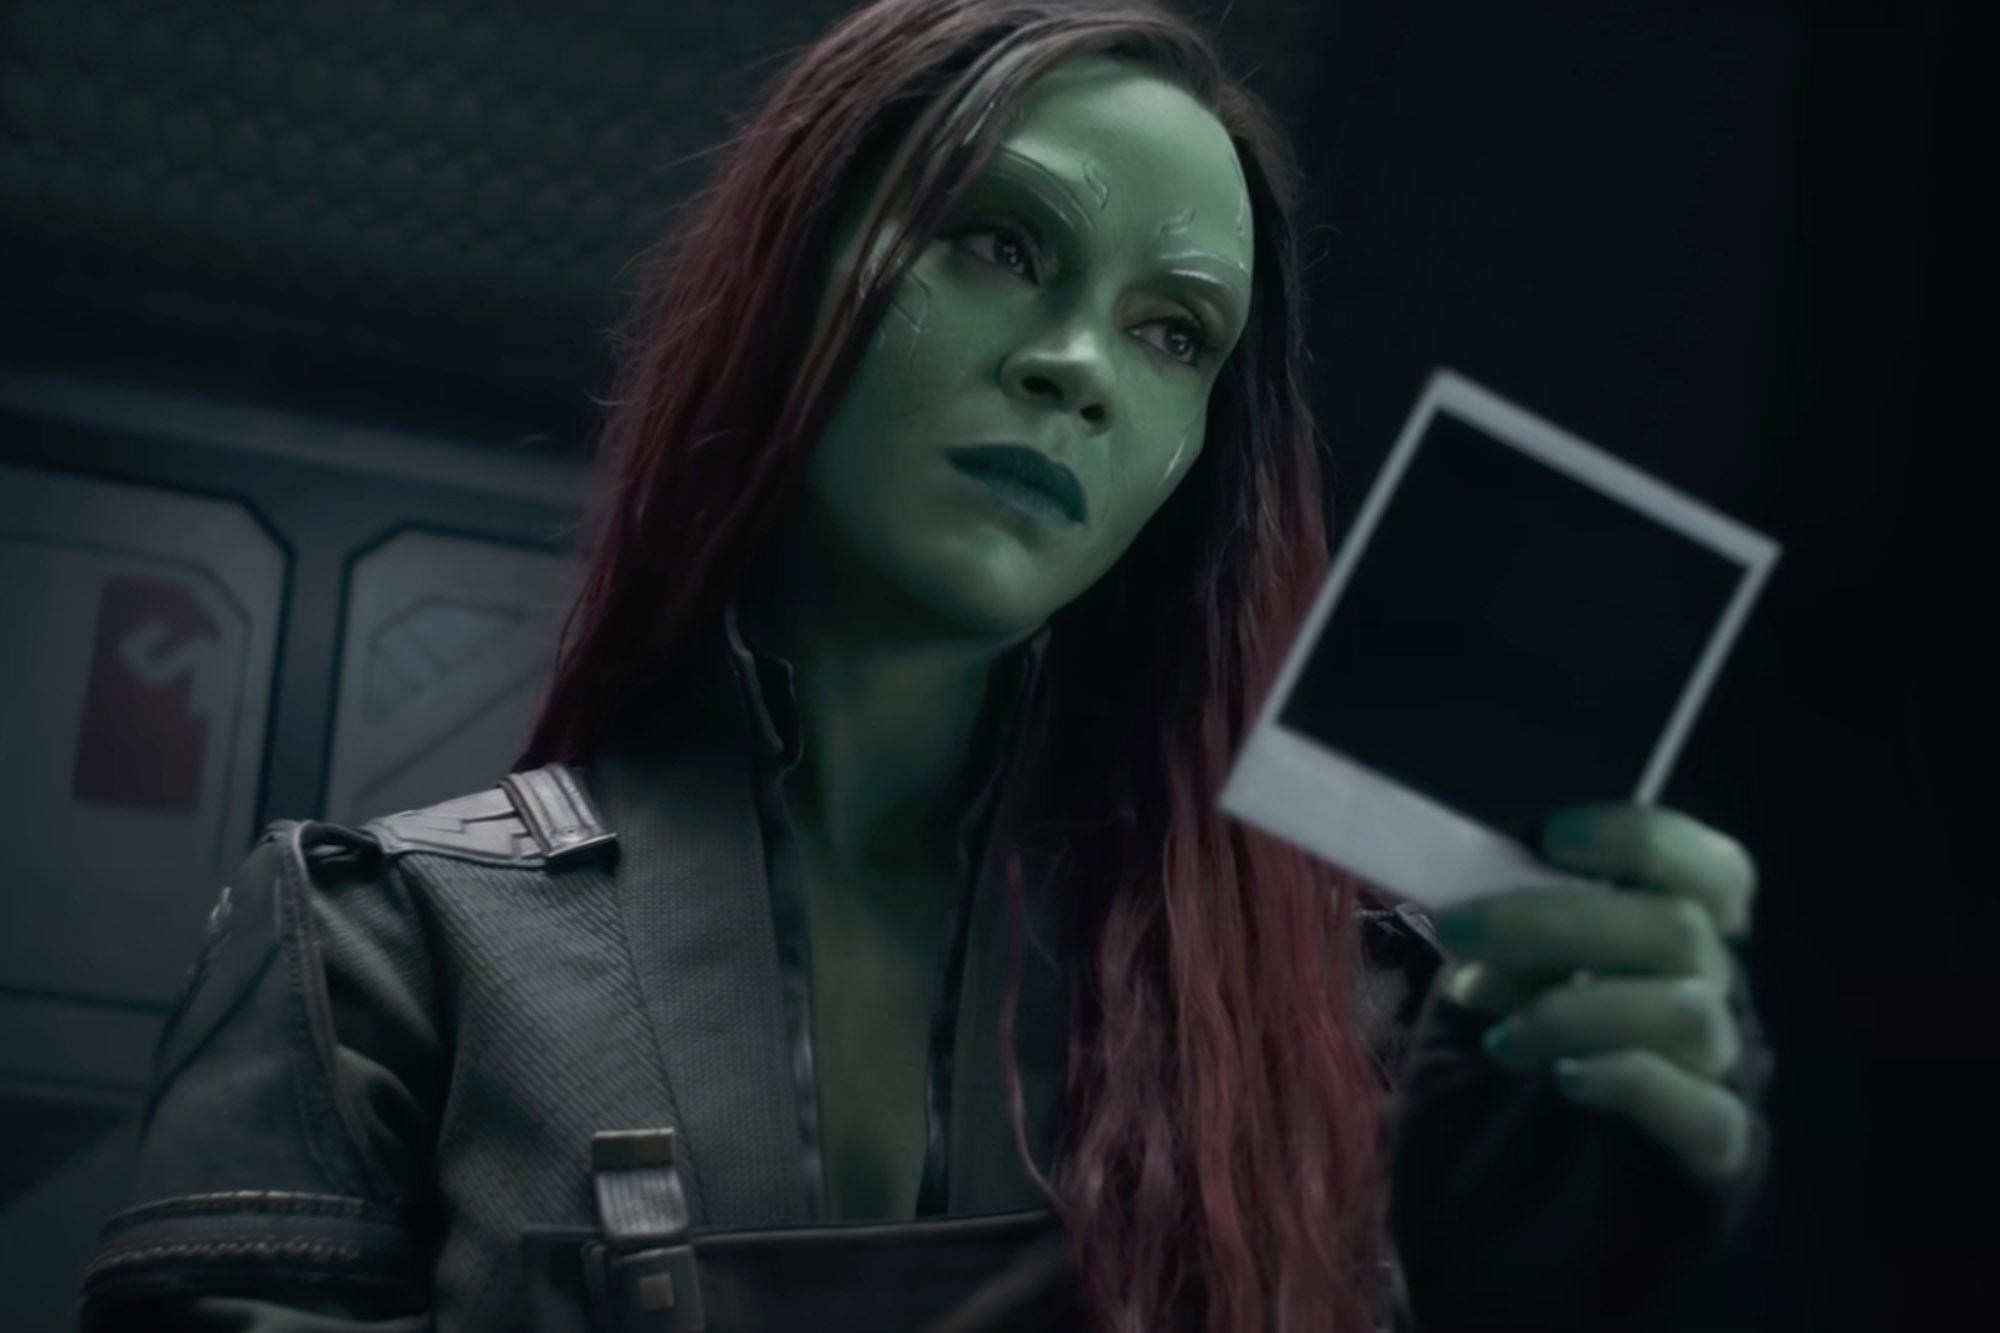 Guardians of the Galaxy Vol. 3' trailer: Gamora's return stuns Marvel fans